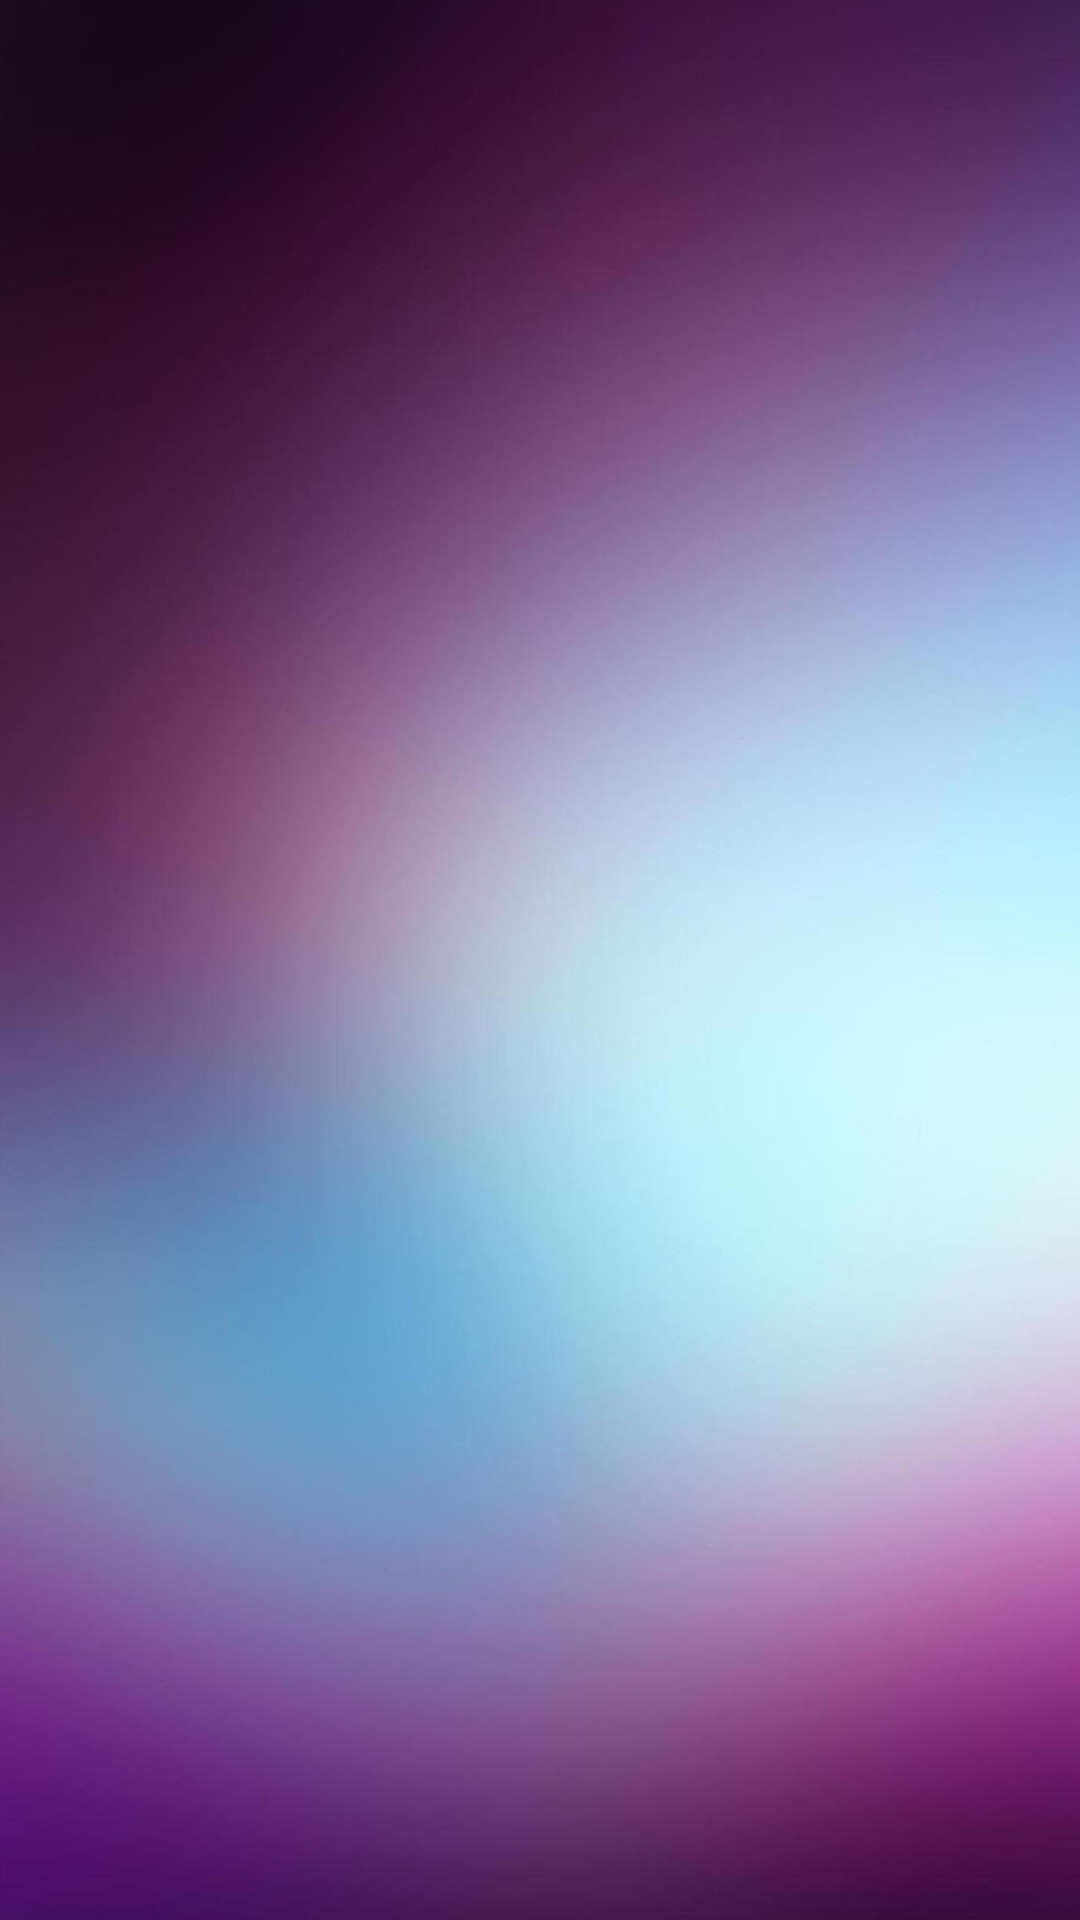 Simple Background Nexus 5 Wallpapers HD 33 Nexus 5 wallpapers and 1080x1920